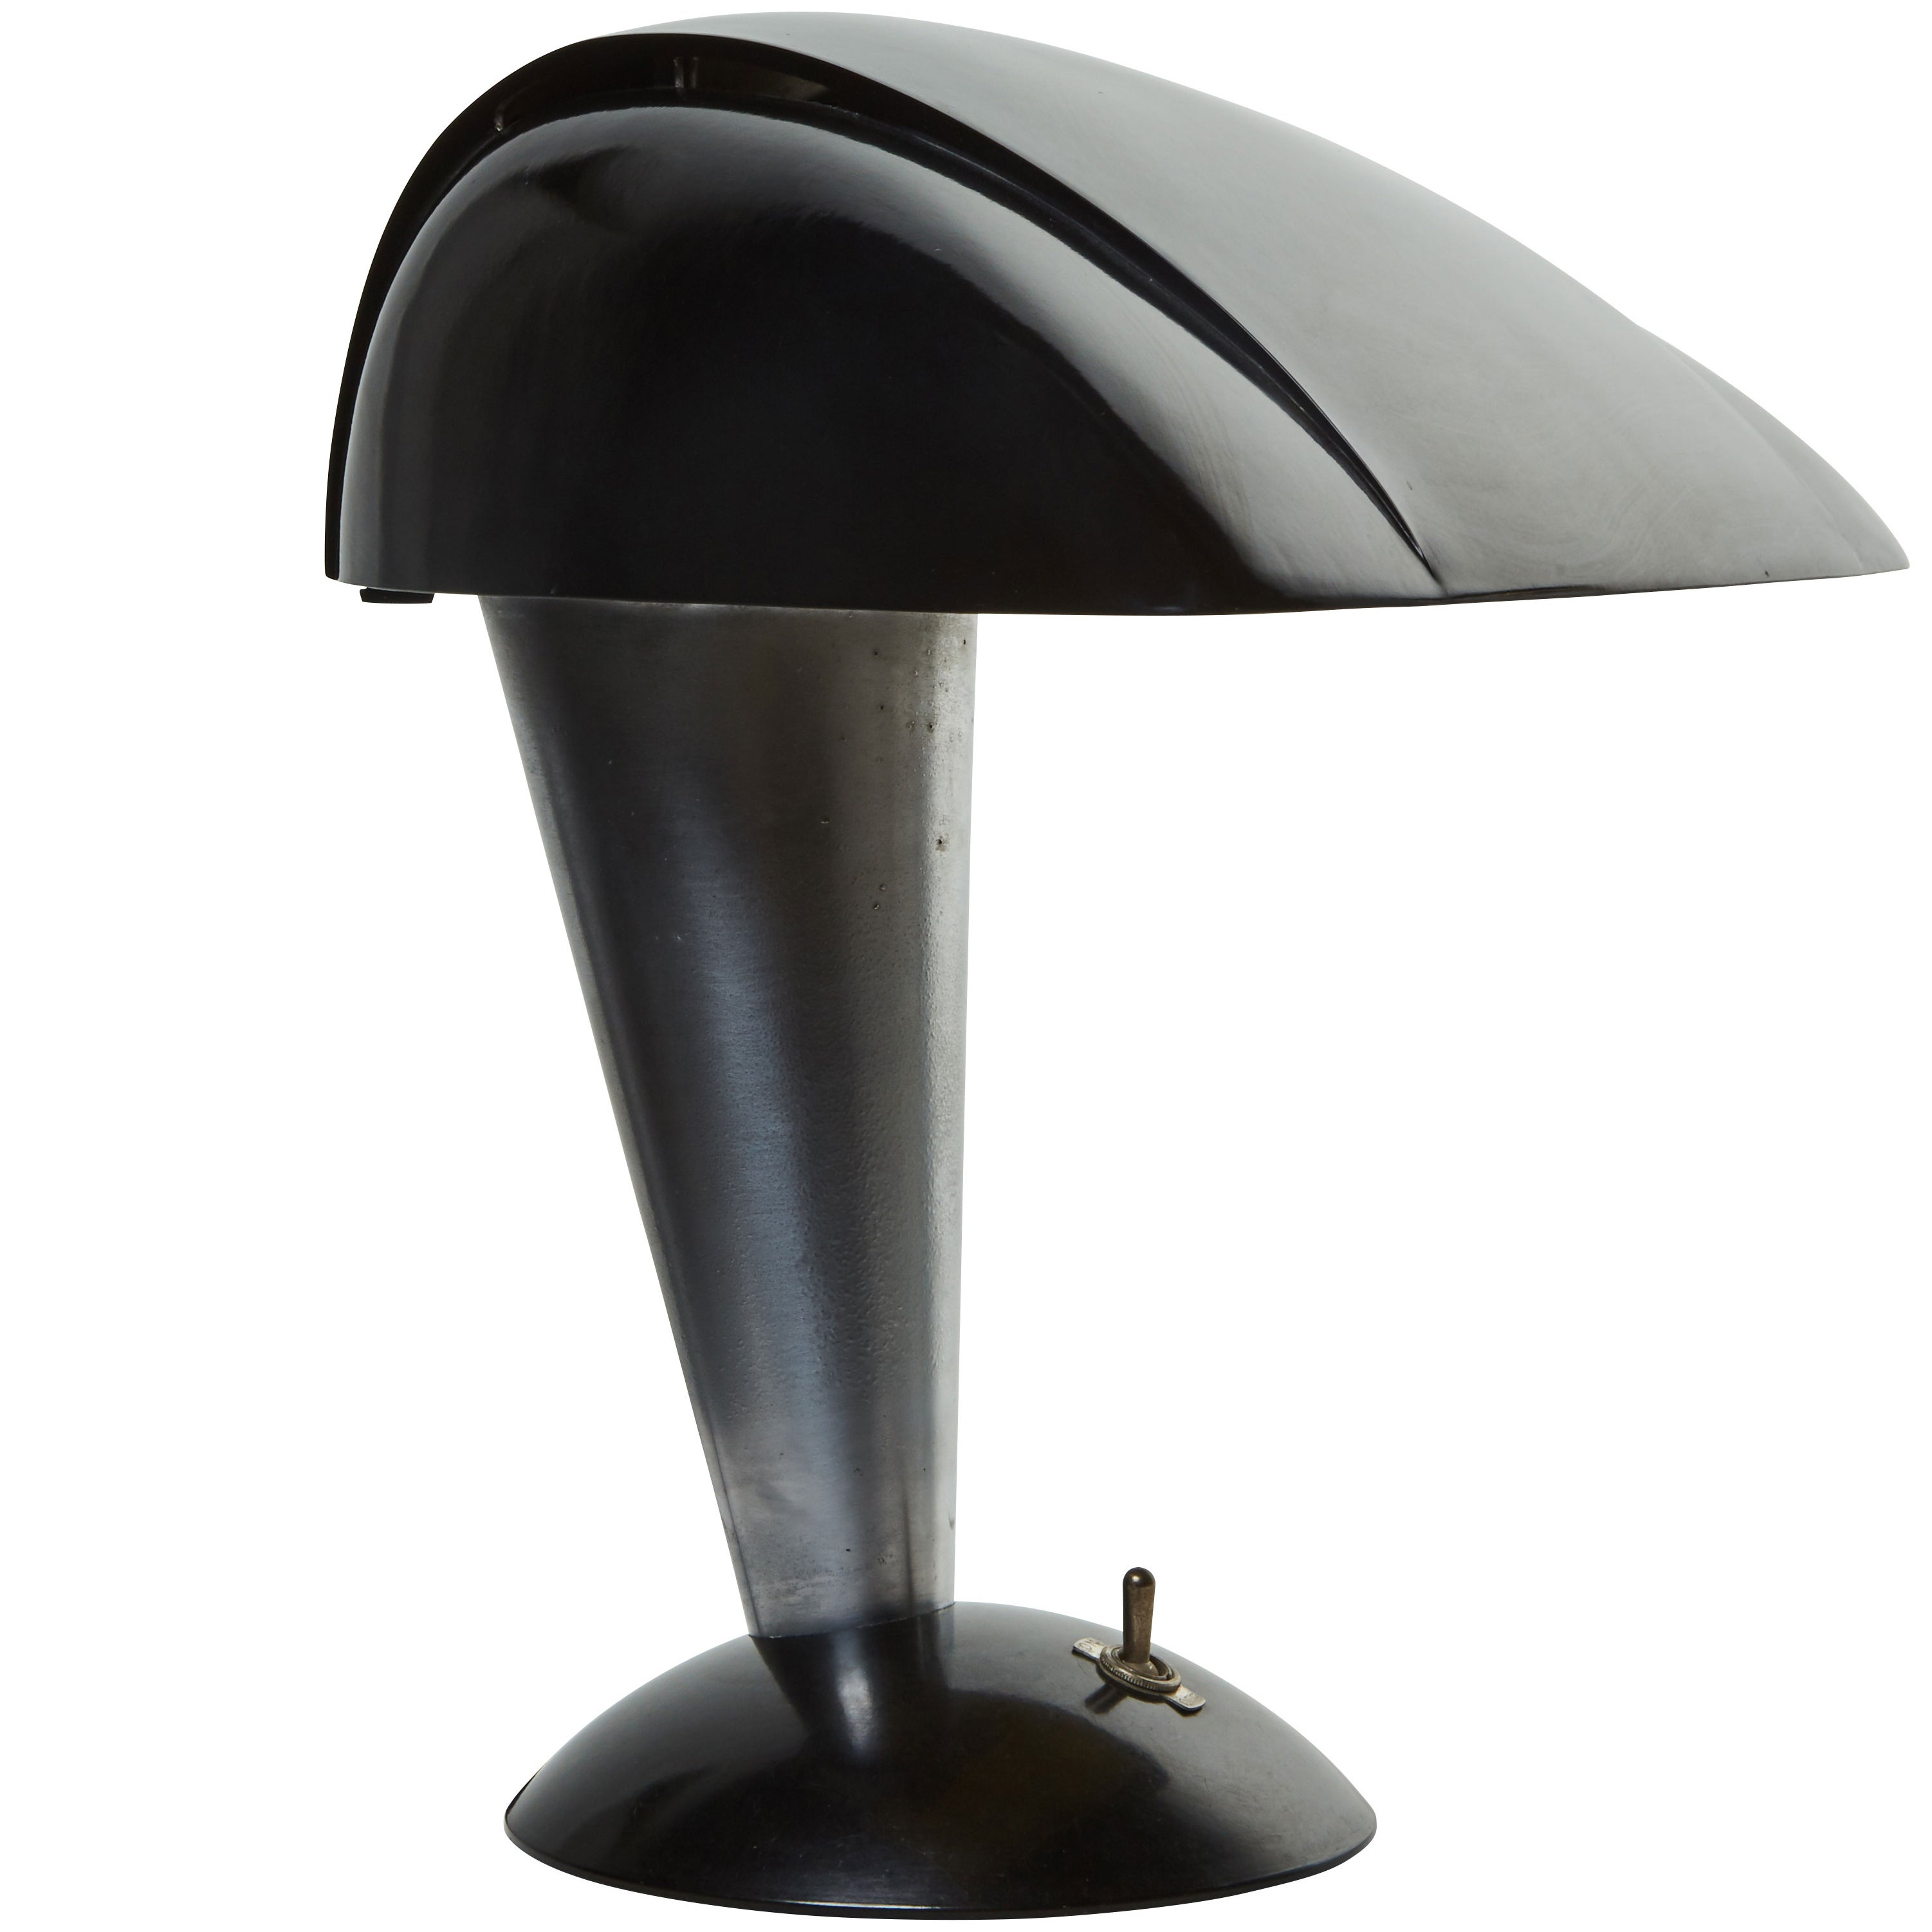 Polaroid Desk Lamp - 2 For Sale on 1stDibs | polaroid lamp